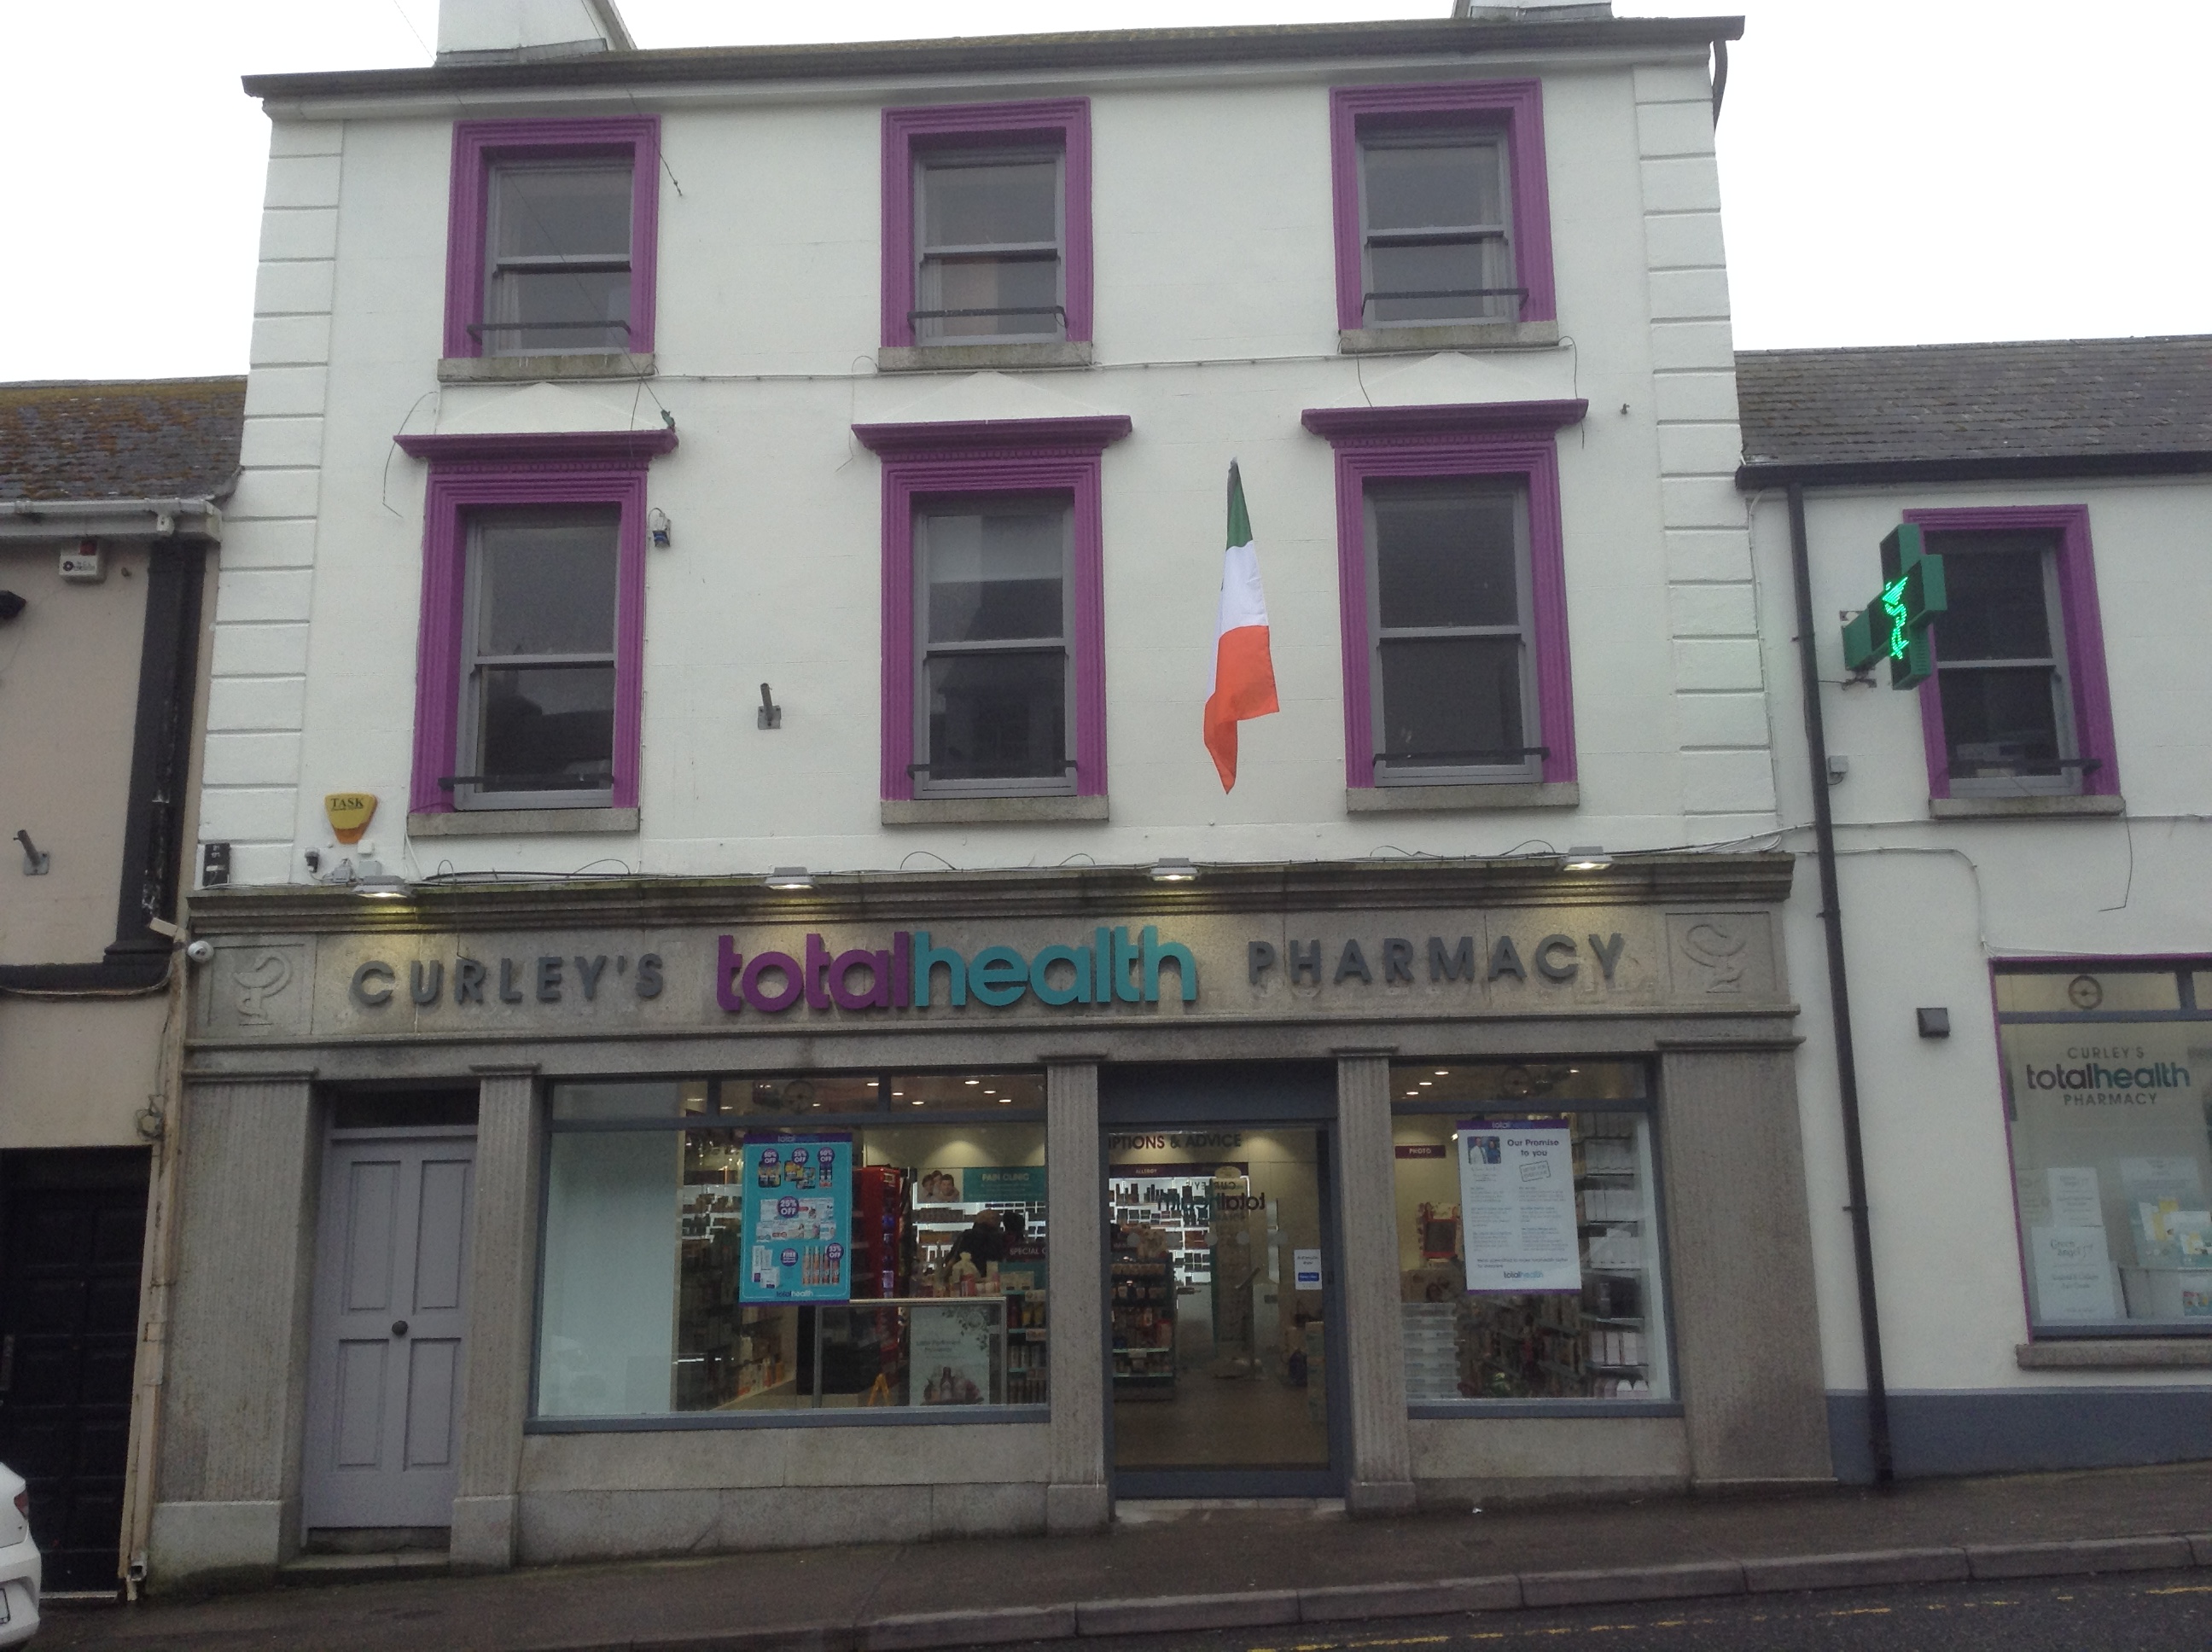 Curley's totalhealth Pharmacy - Ballyhaunis